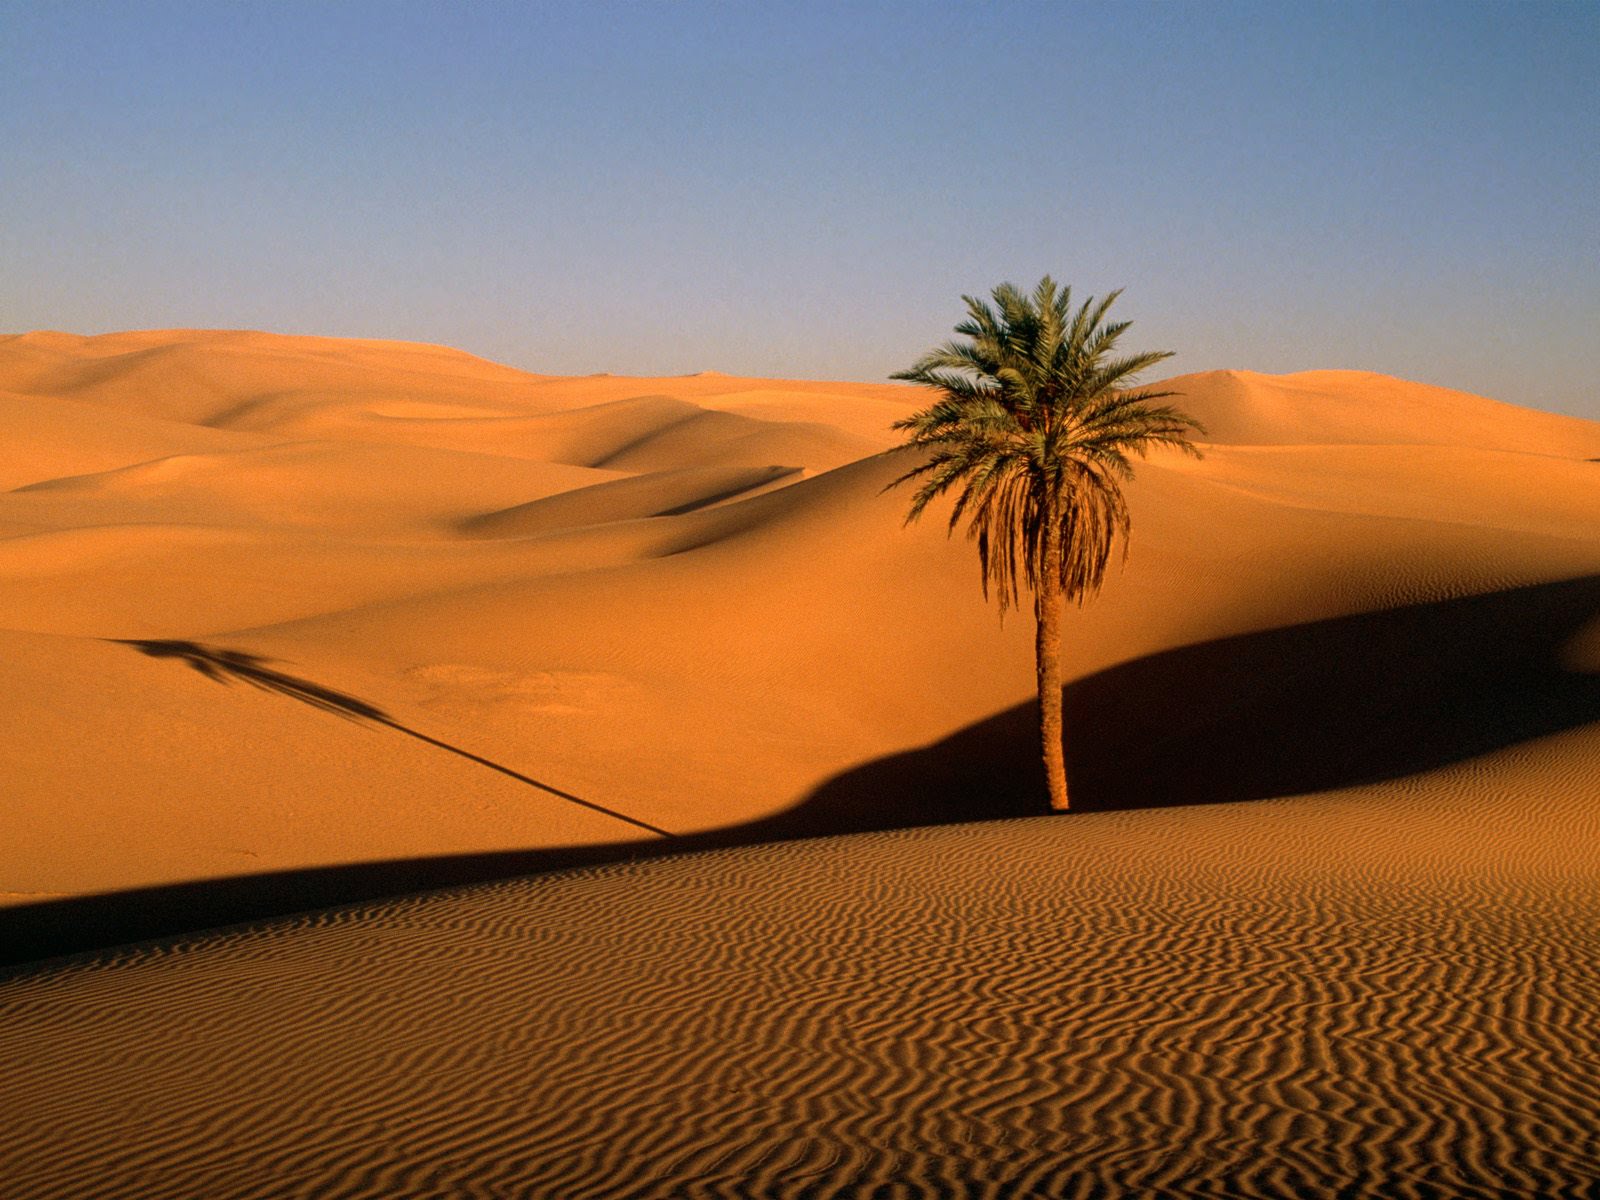 sagarJanab: Desert life